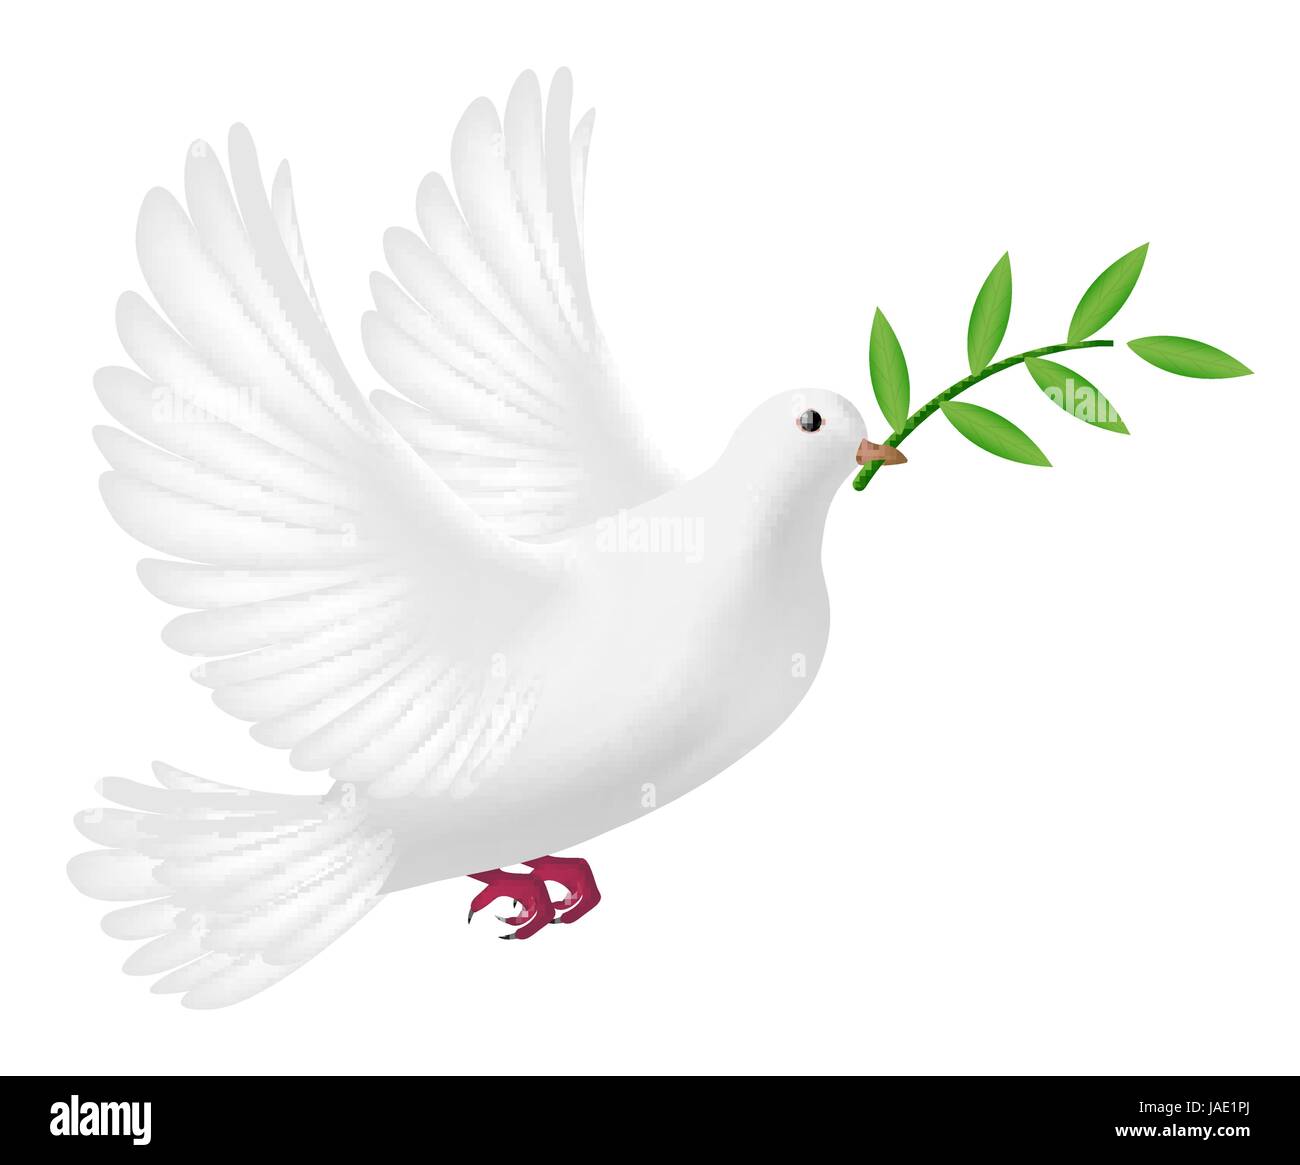 Paloma blanca volando fotografías e imágenes de alta resolución - Alamy